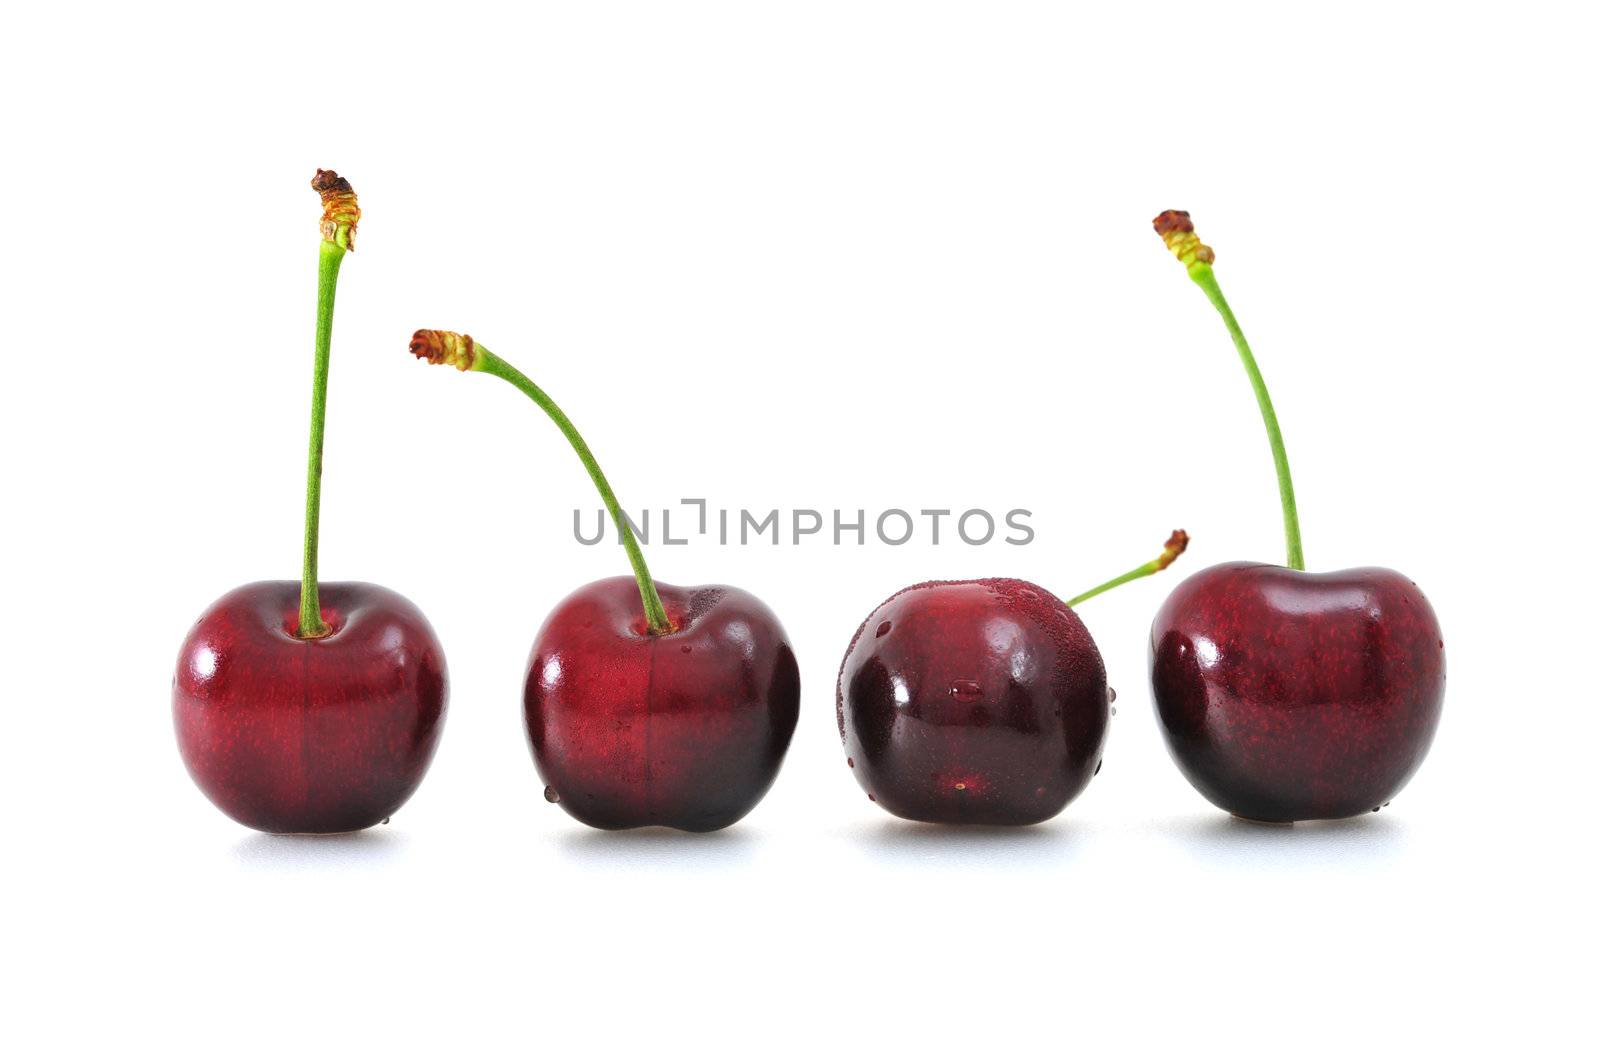 Four Cherries